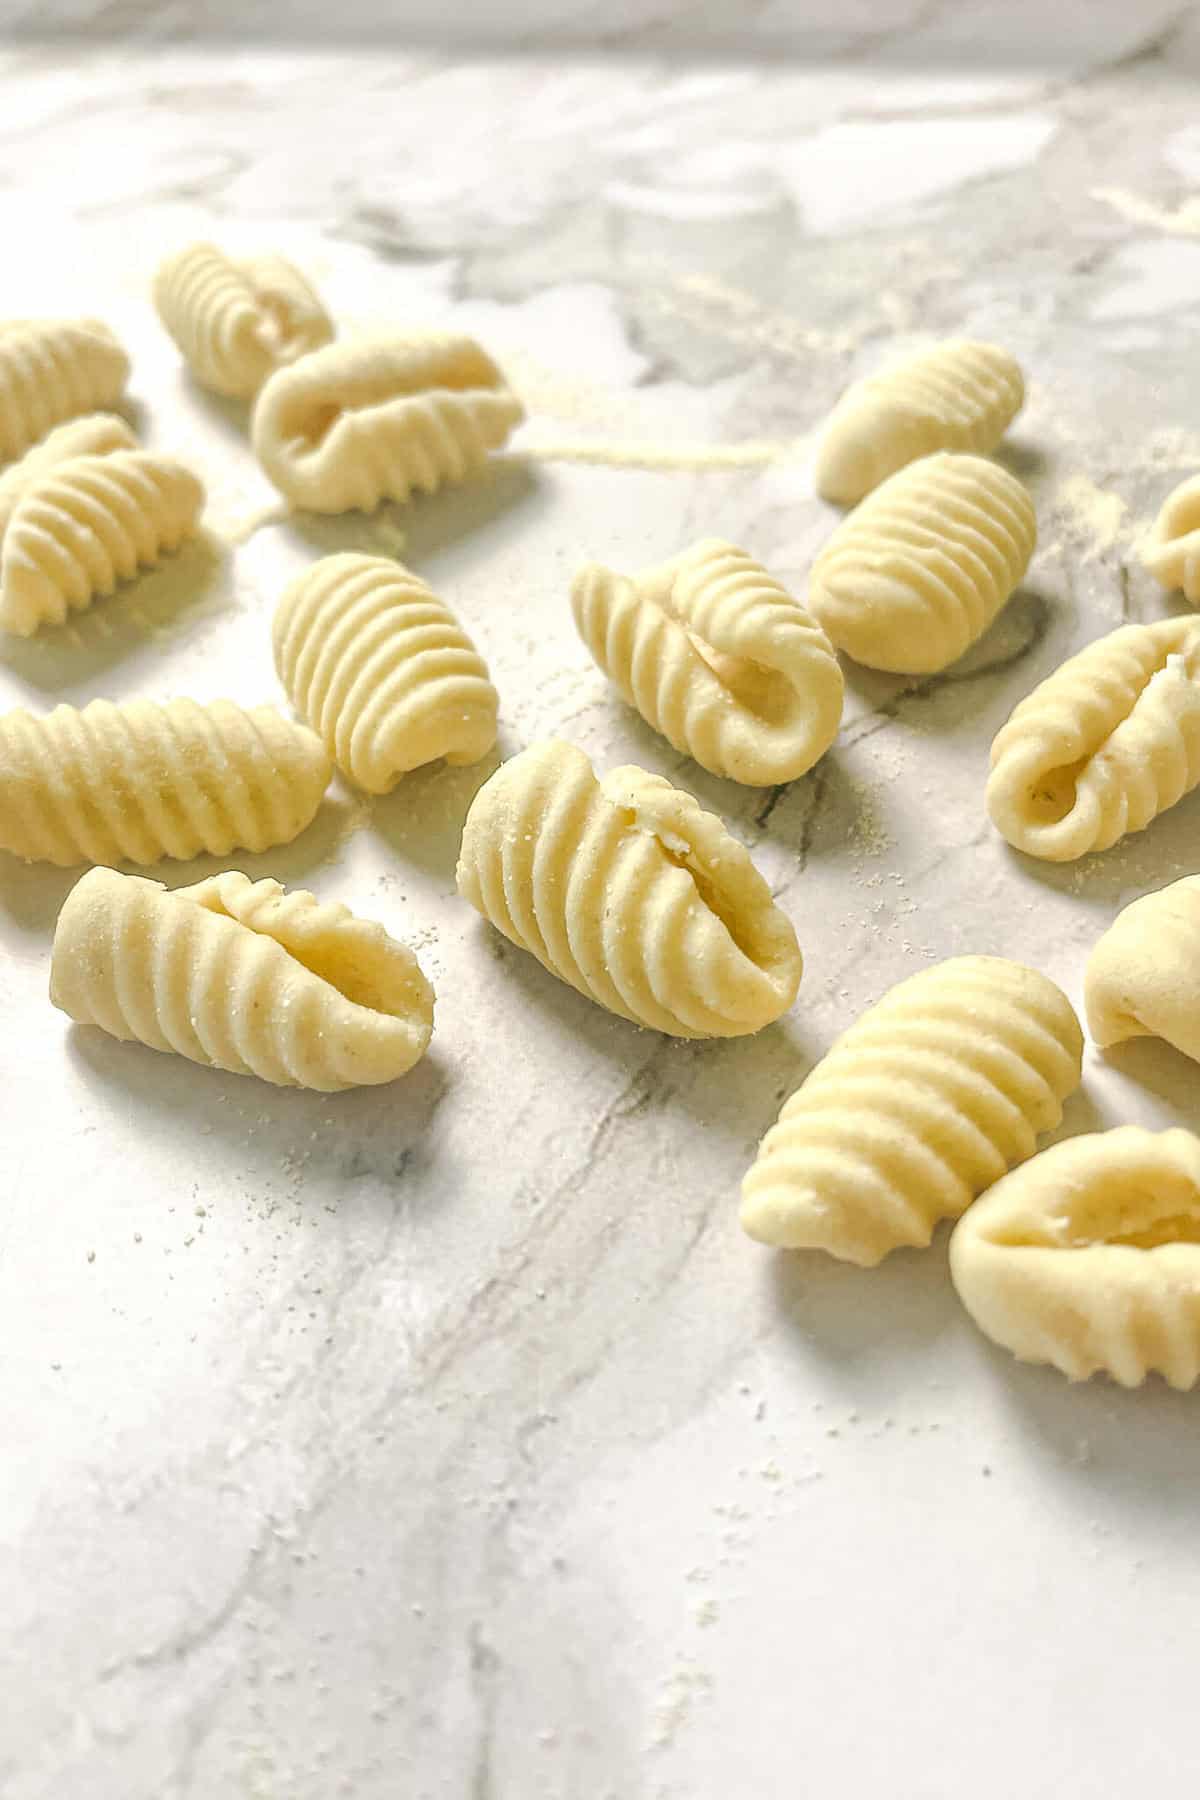 handmade cavatelli pasta on counter